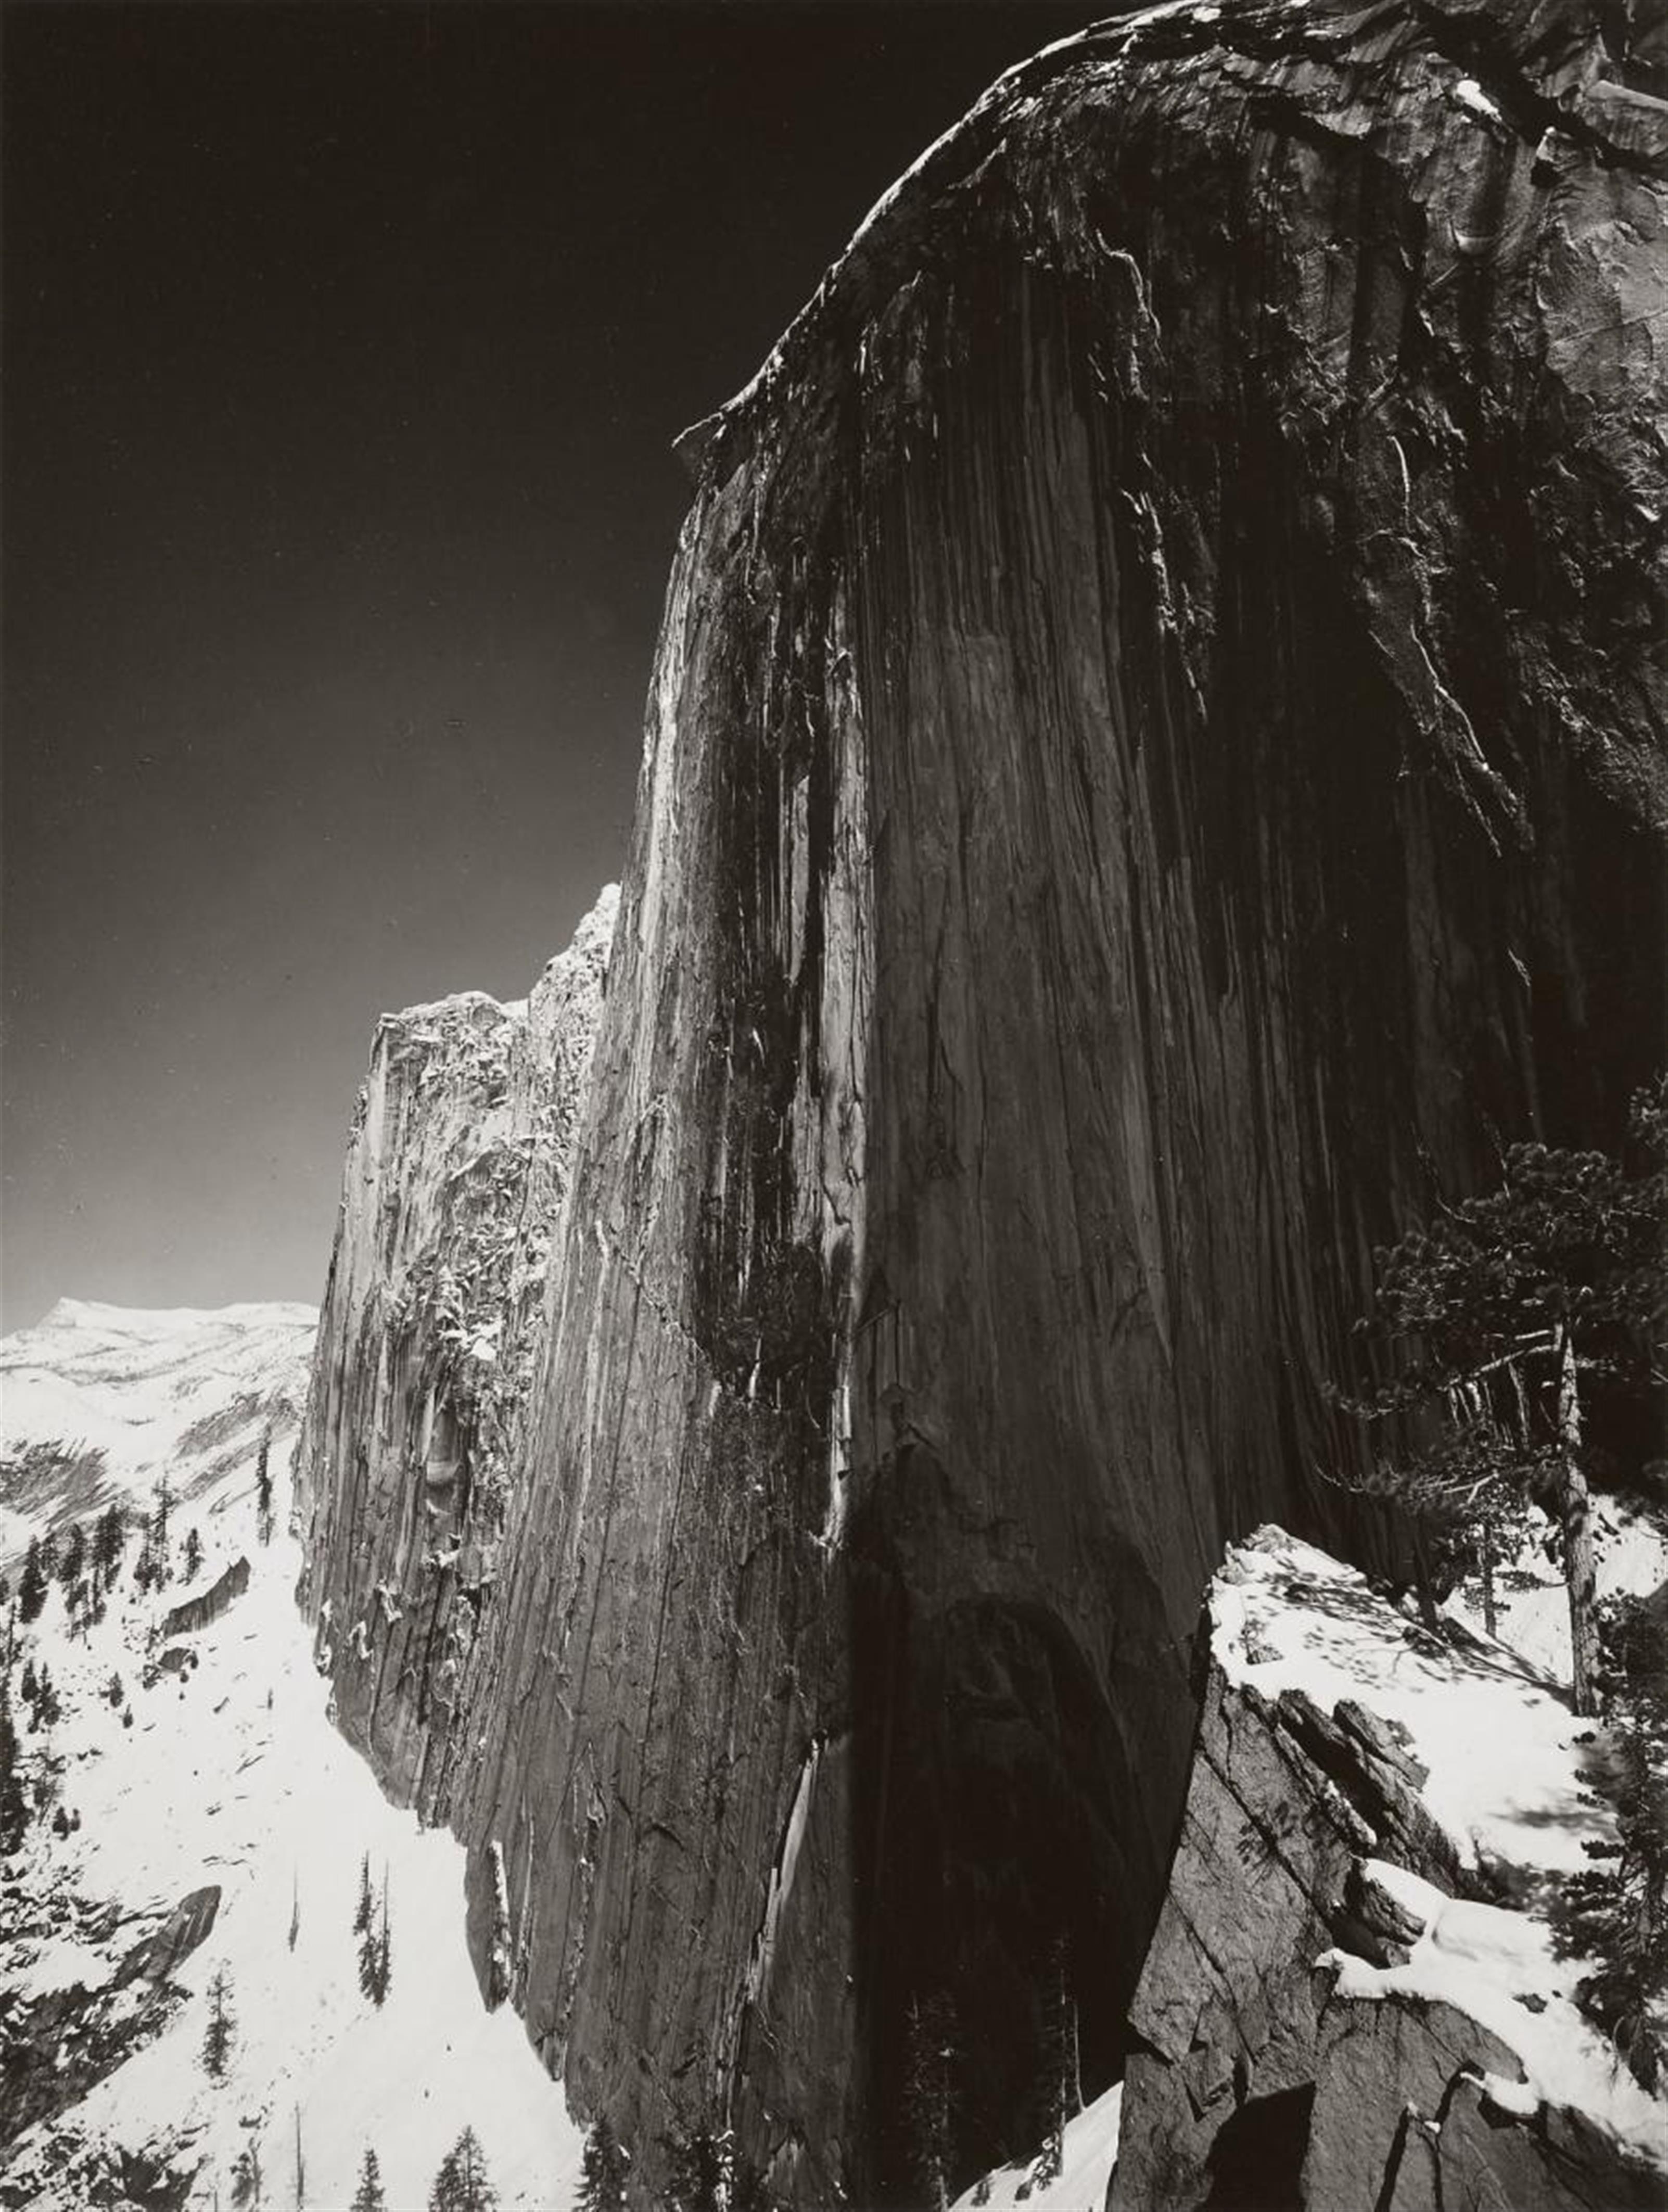 Ansel Adams - MONOLITH, THE FACE OF HALF DOME, YOSEMITE NATIONAL PARK, CALIFORNIA - image-2